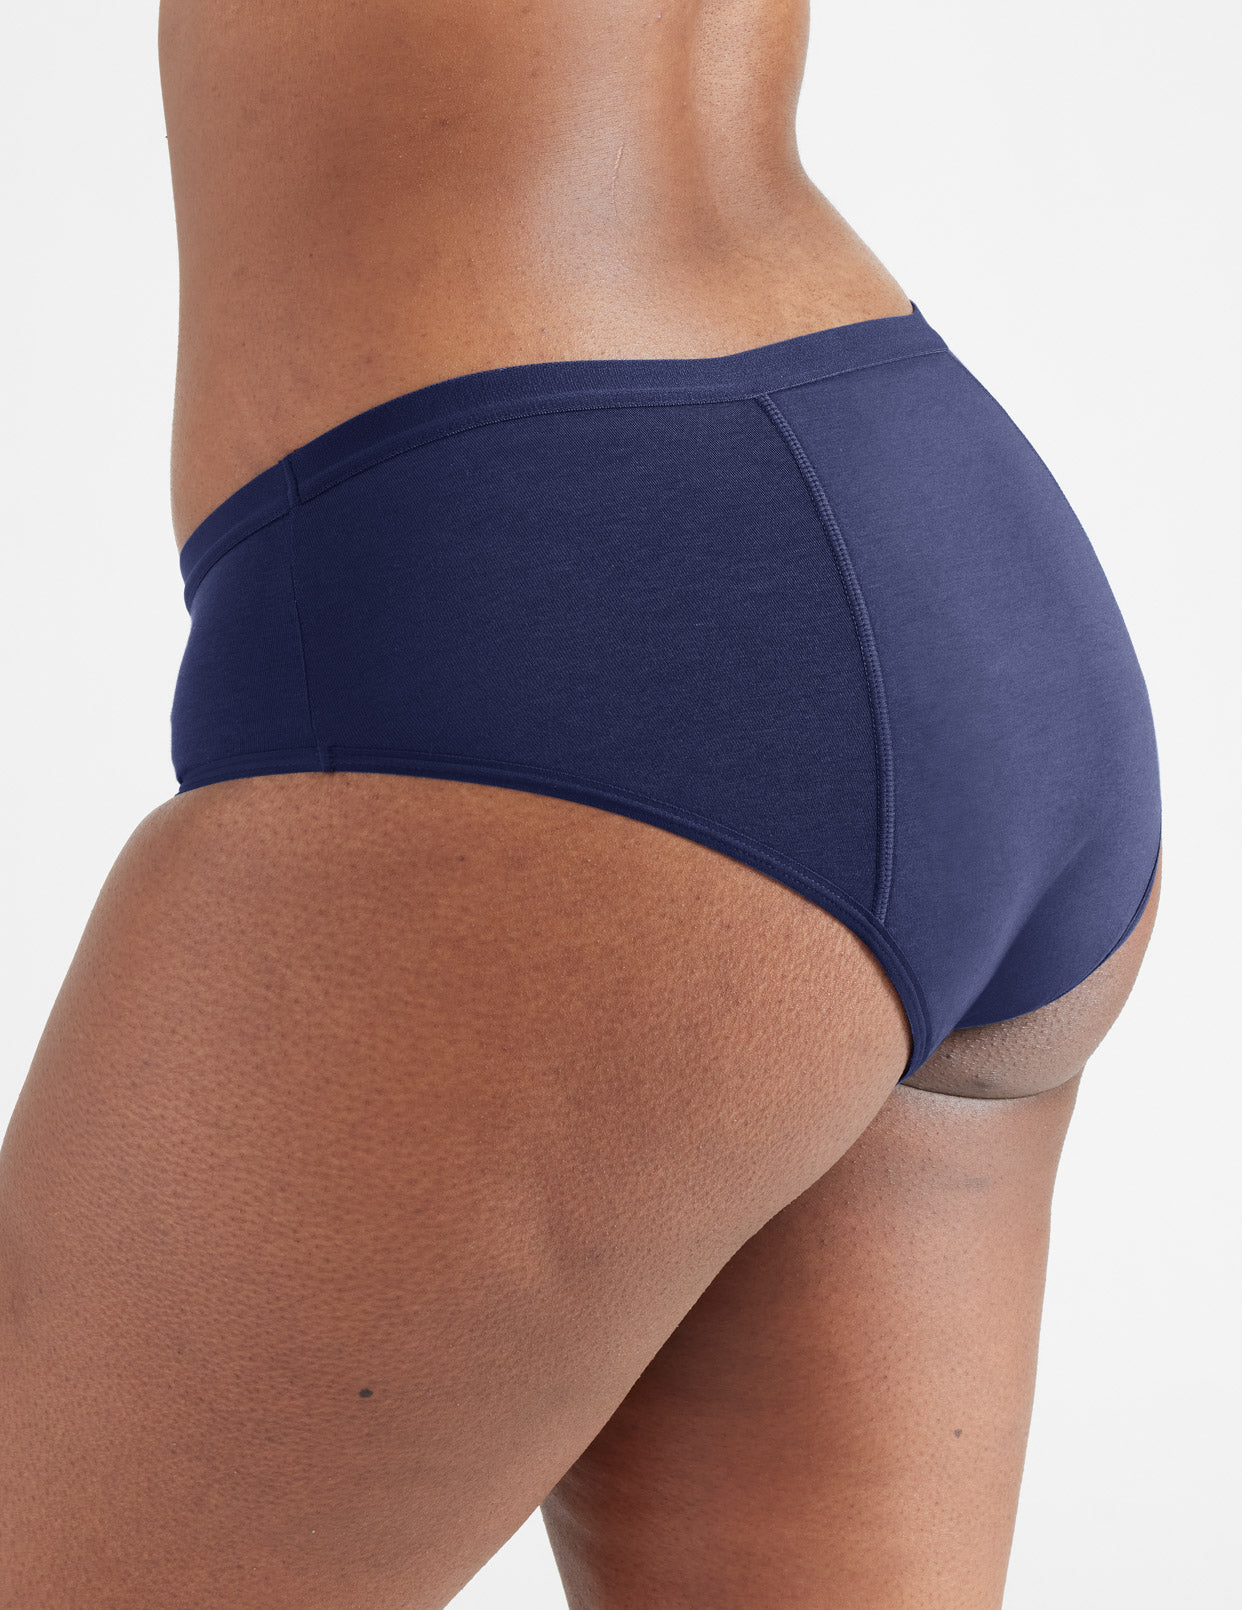 Unders by Proof Period Underwear - Regular Brief (2 Tampons / 6 Tsps) 